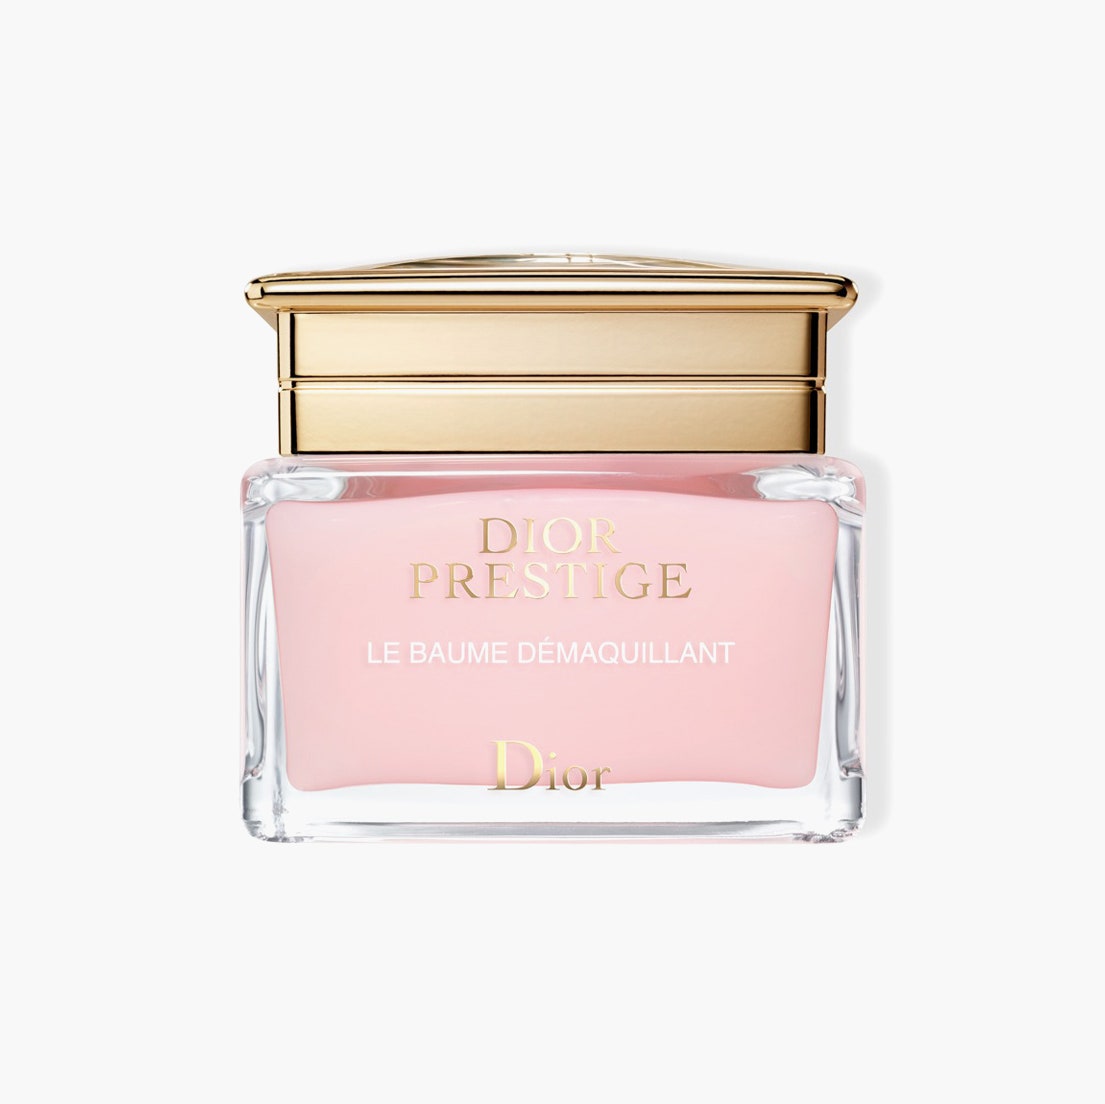 Бальзаммасло для снятия макияжа Dior Prestige Dior 7085 рублей